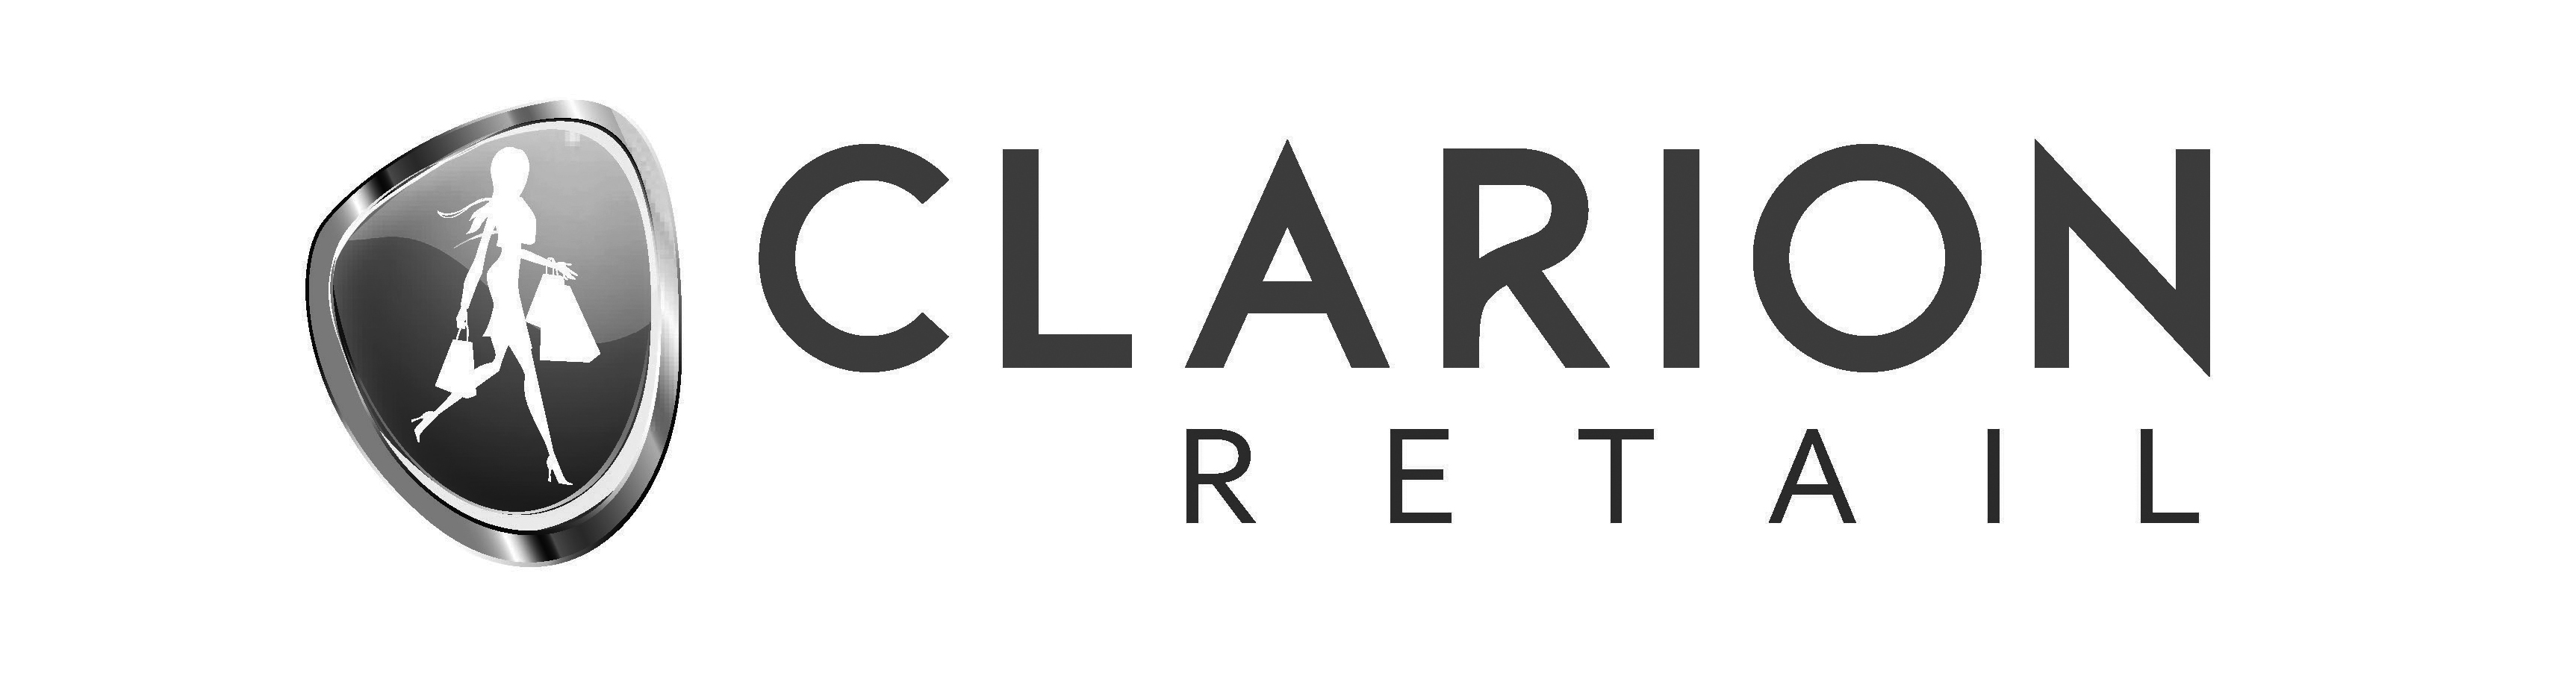 Clarion retail_Logo_bw